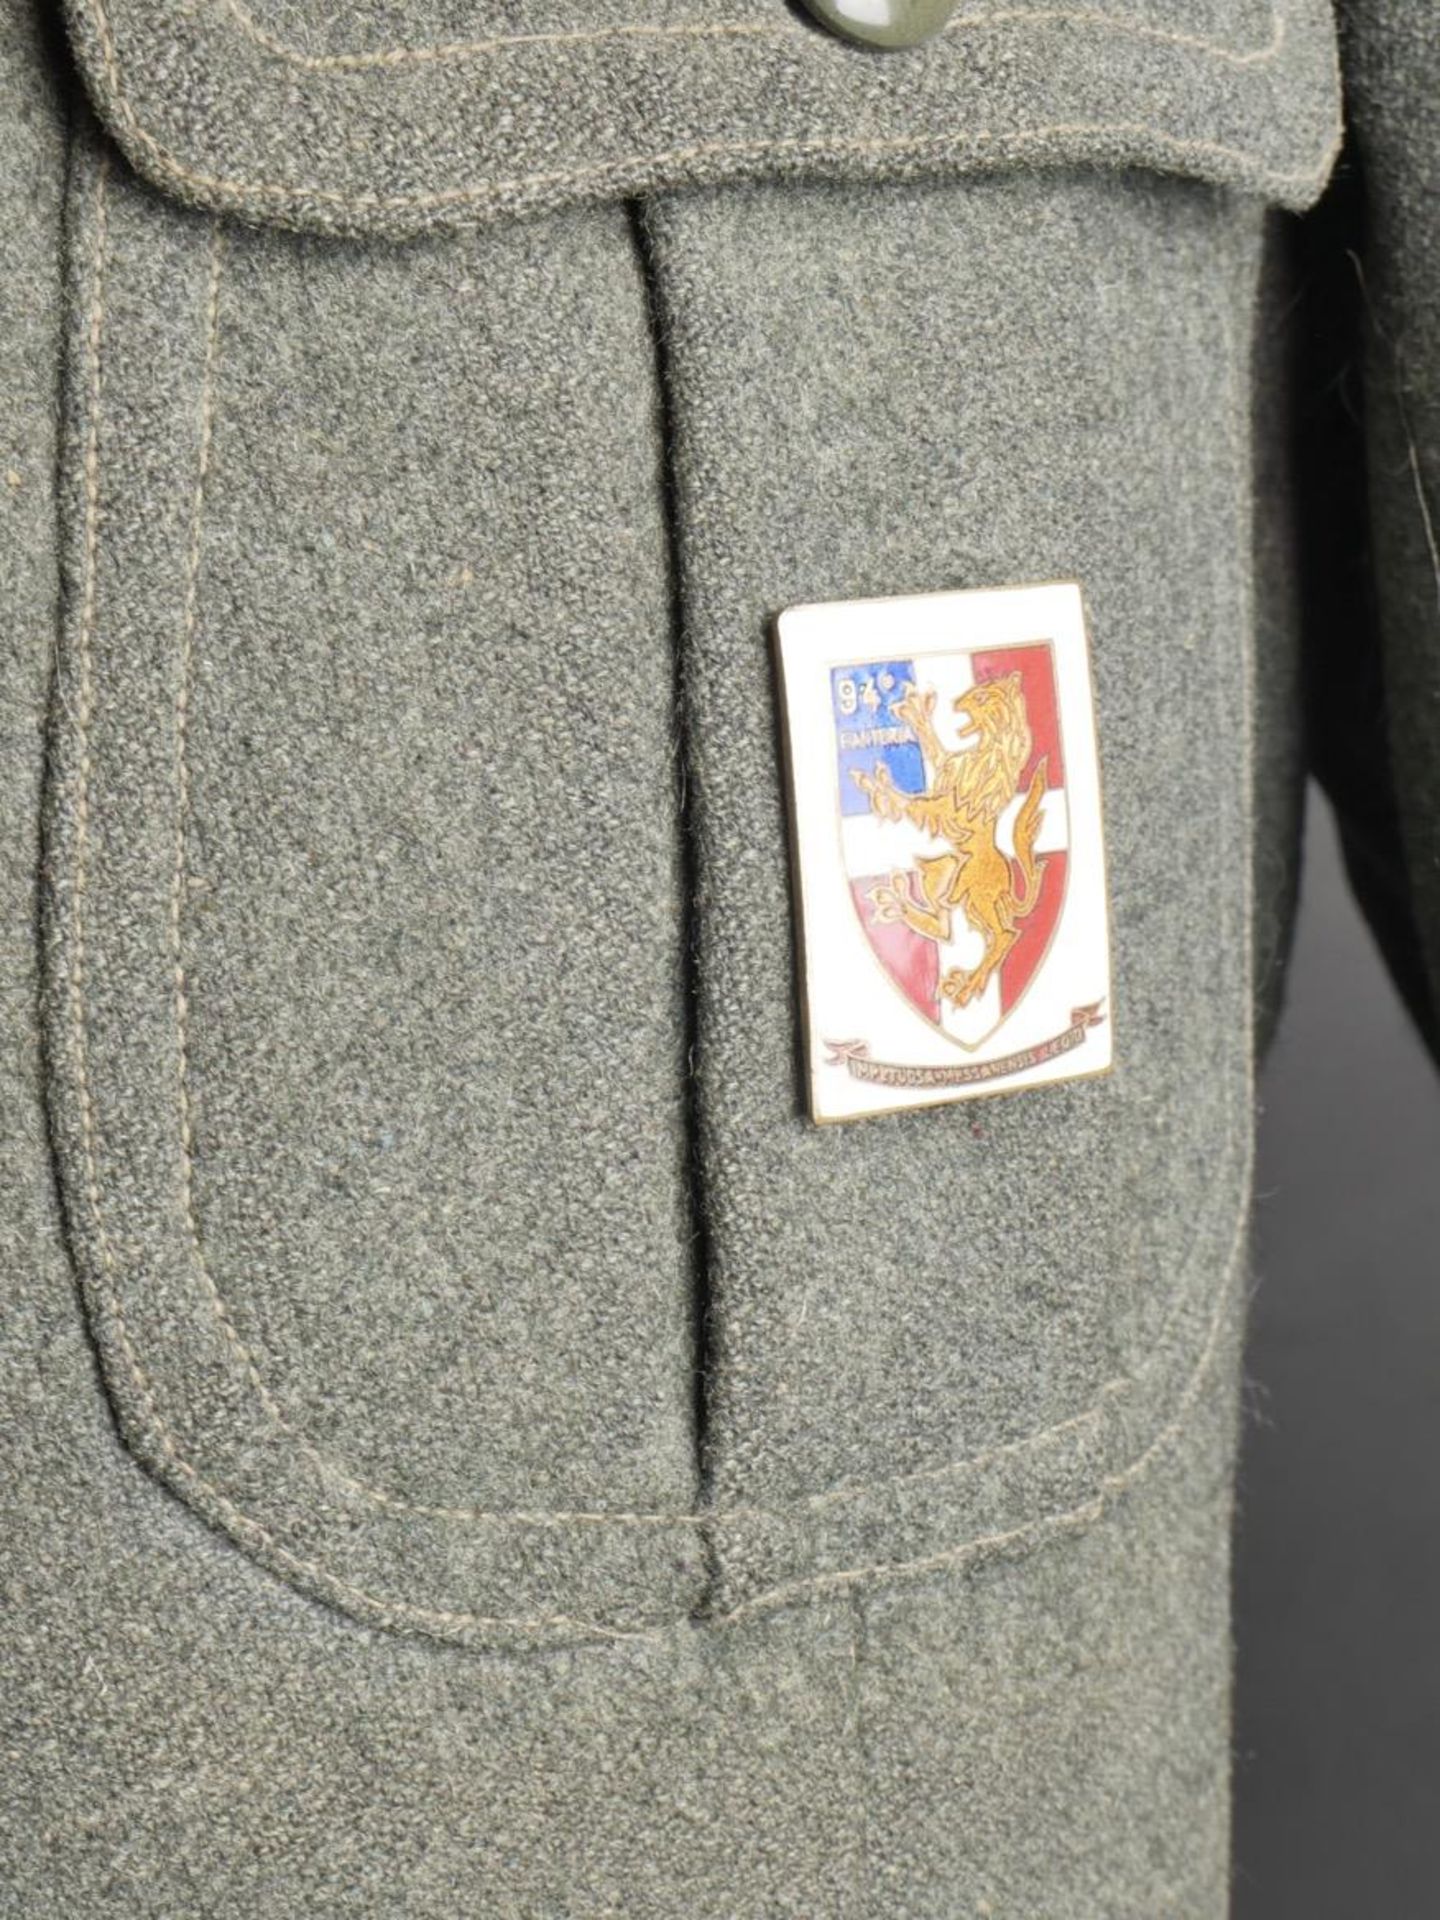 Vareuse de Lieutenant de la division Messina. Messina Division Lieutenant s jacket. - Image 10 of 19